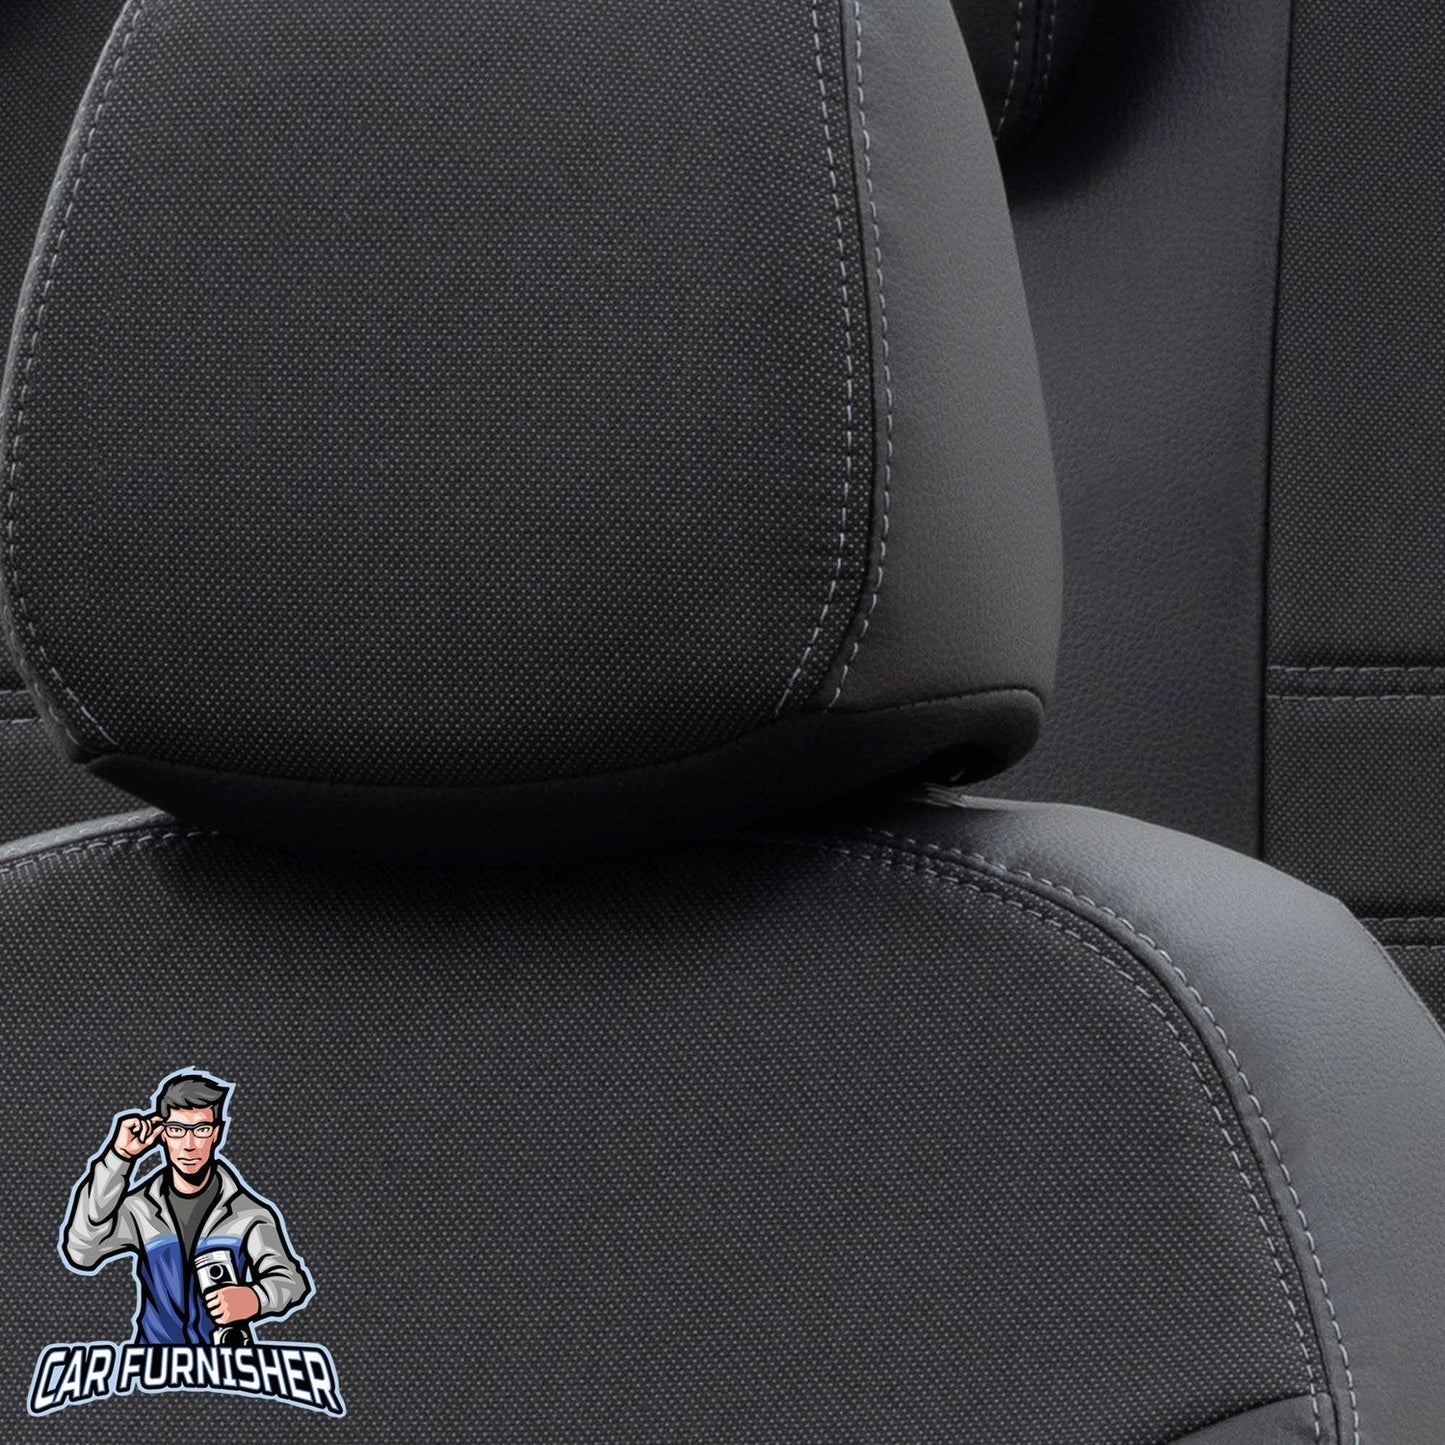 Isuzu Nlr Seat Covers Paris Leather & Jacquard Design Black Leather & Jacquard Fabric